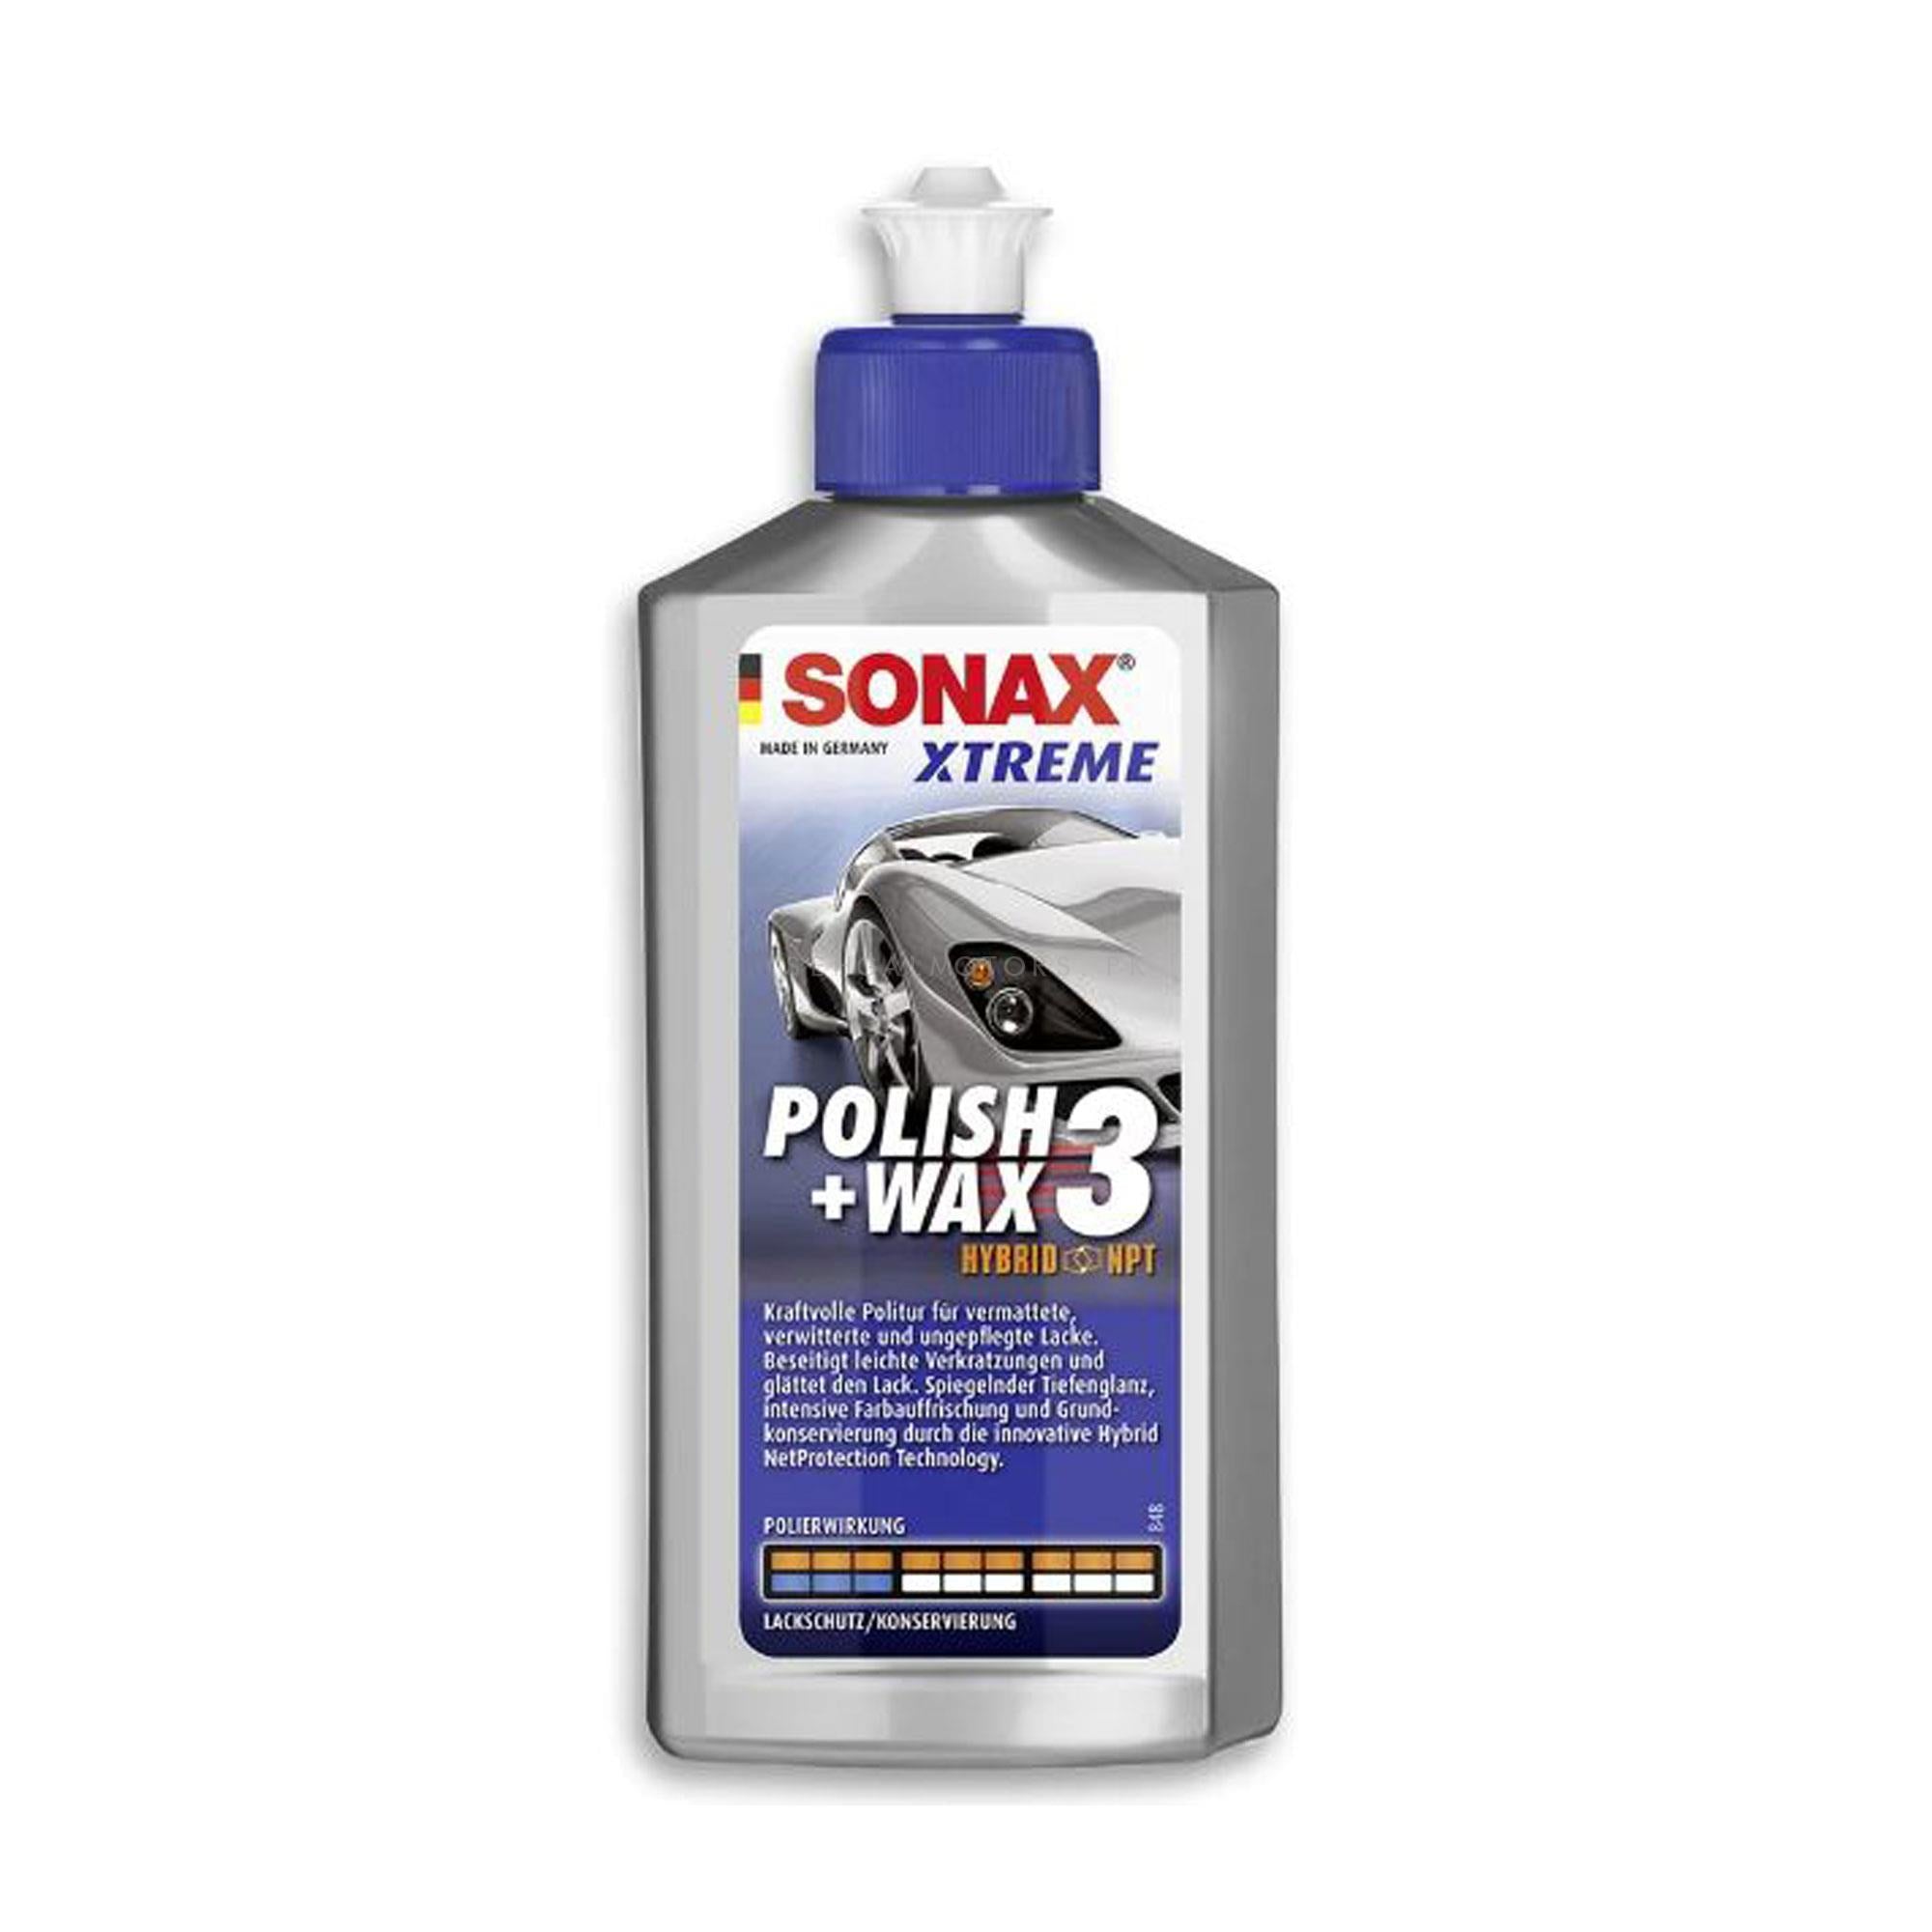 SONAX XTREME Polish & Wax 3 (500ML)